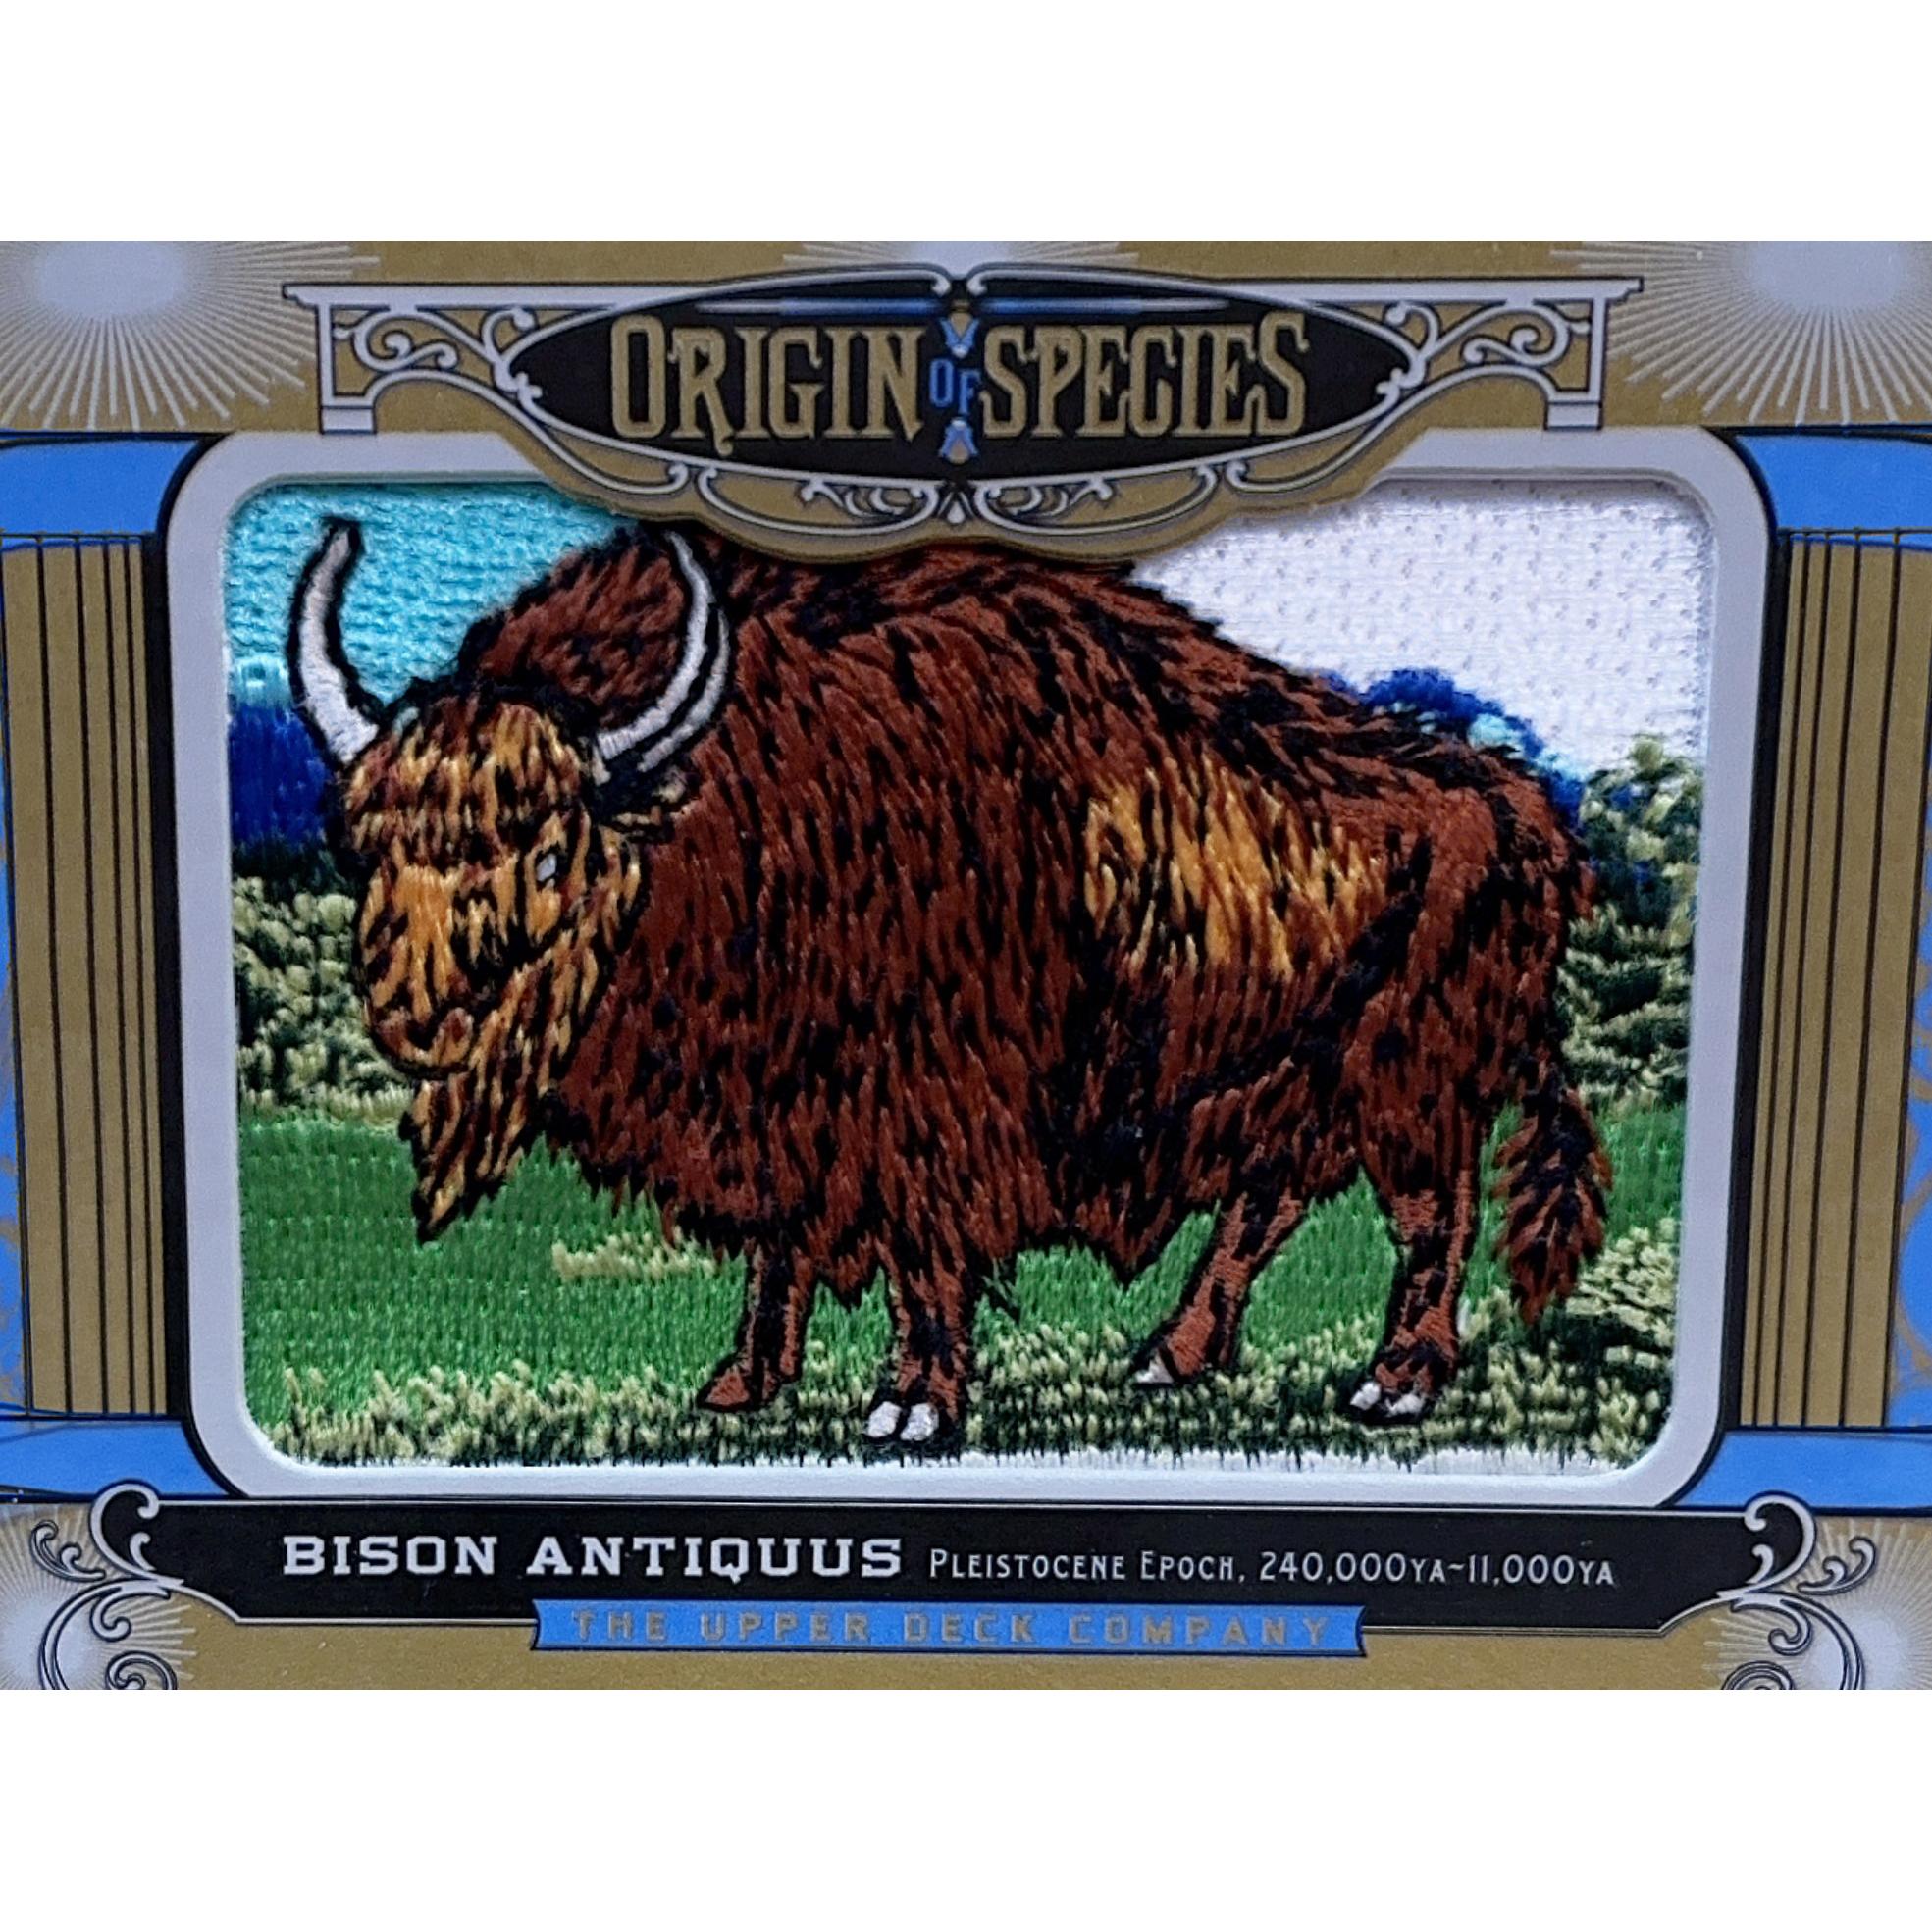 Upper deck, Bison Antiquus patch Prehistoric Online